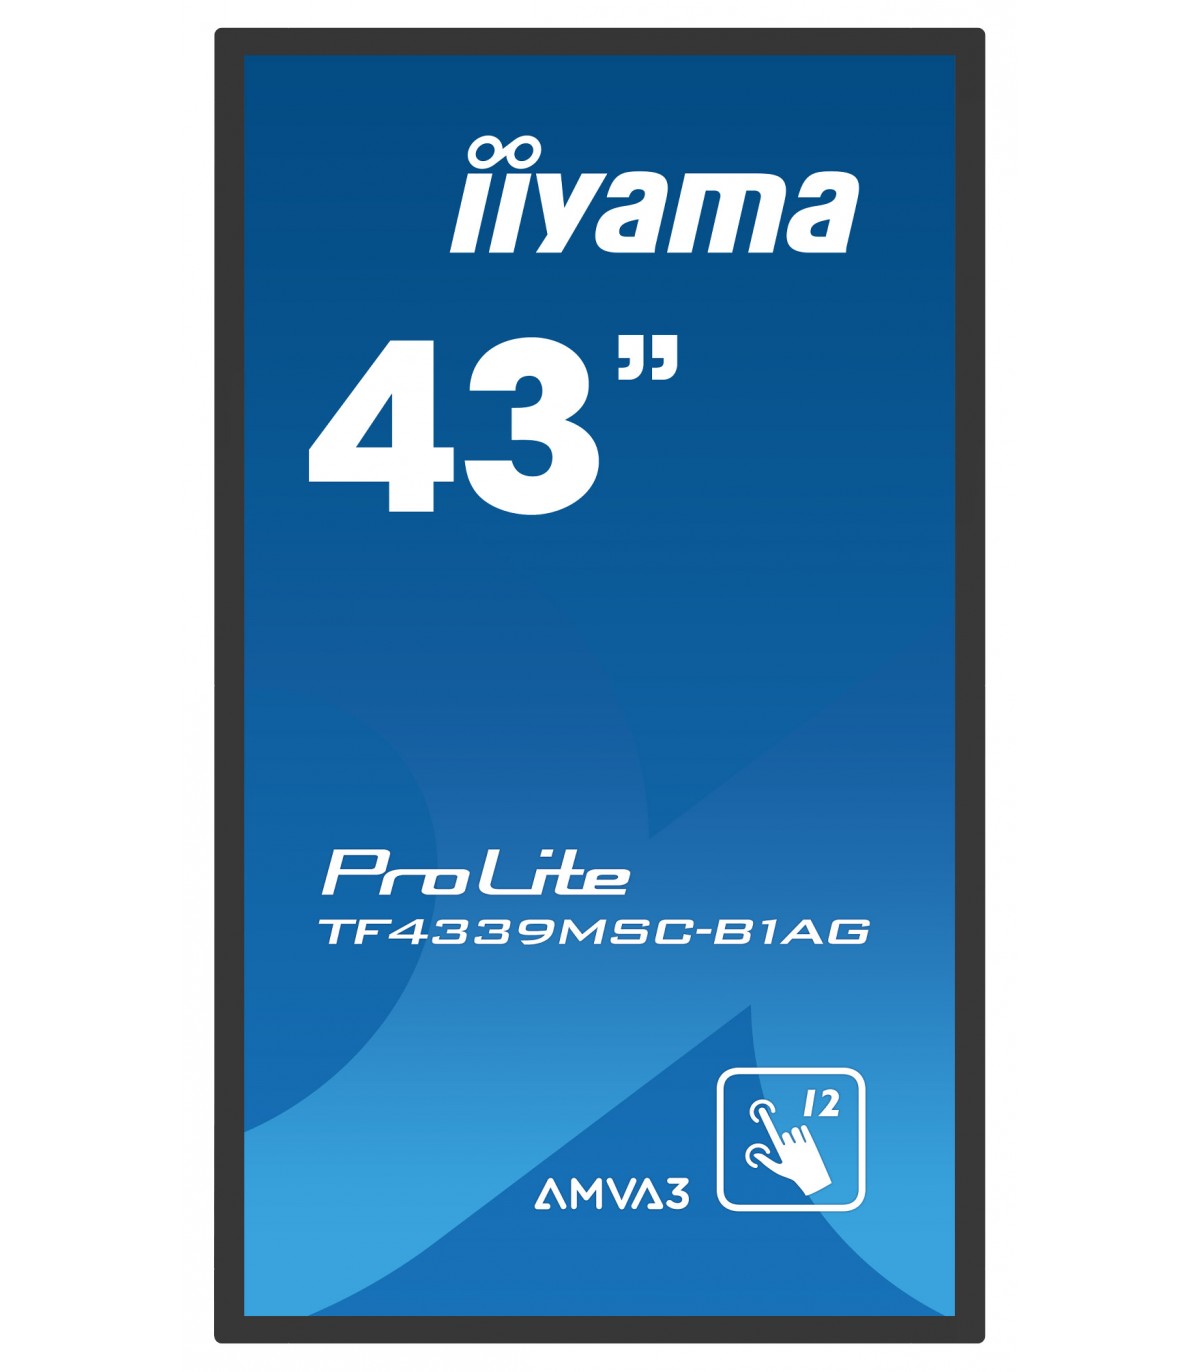 iiyama - Professional Touchscreen Monitor, 24/7